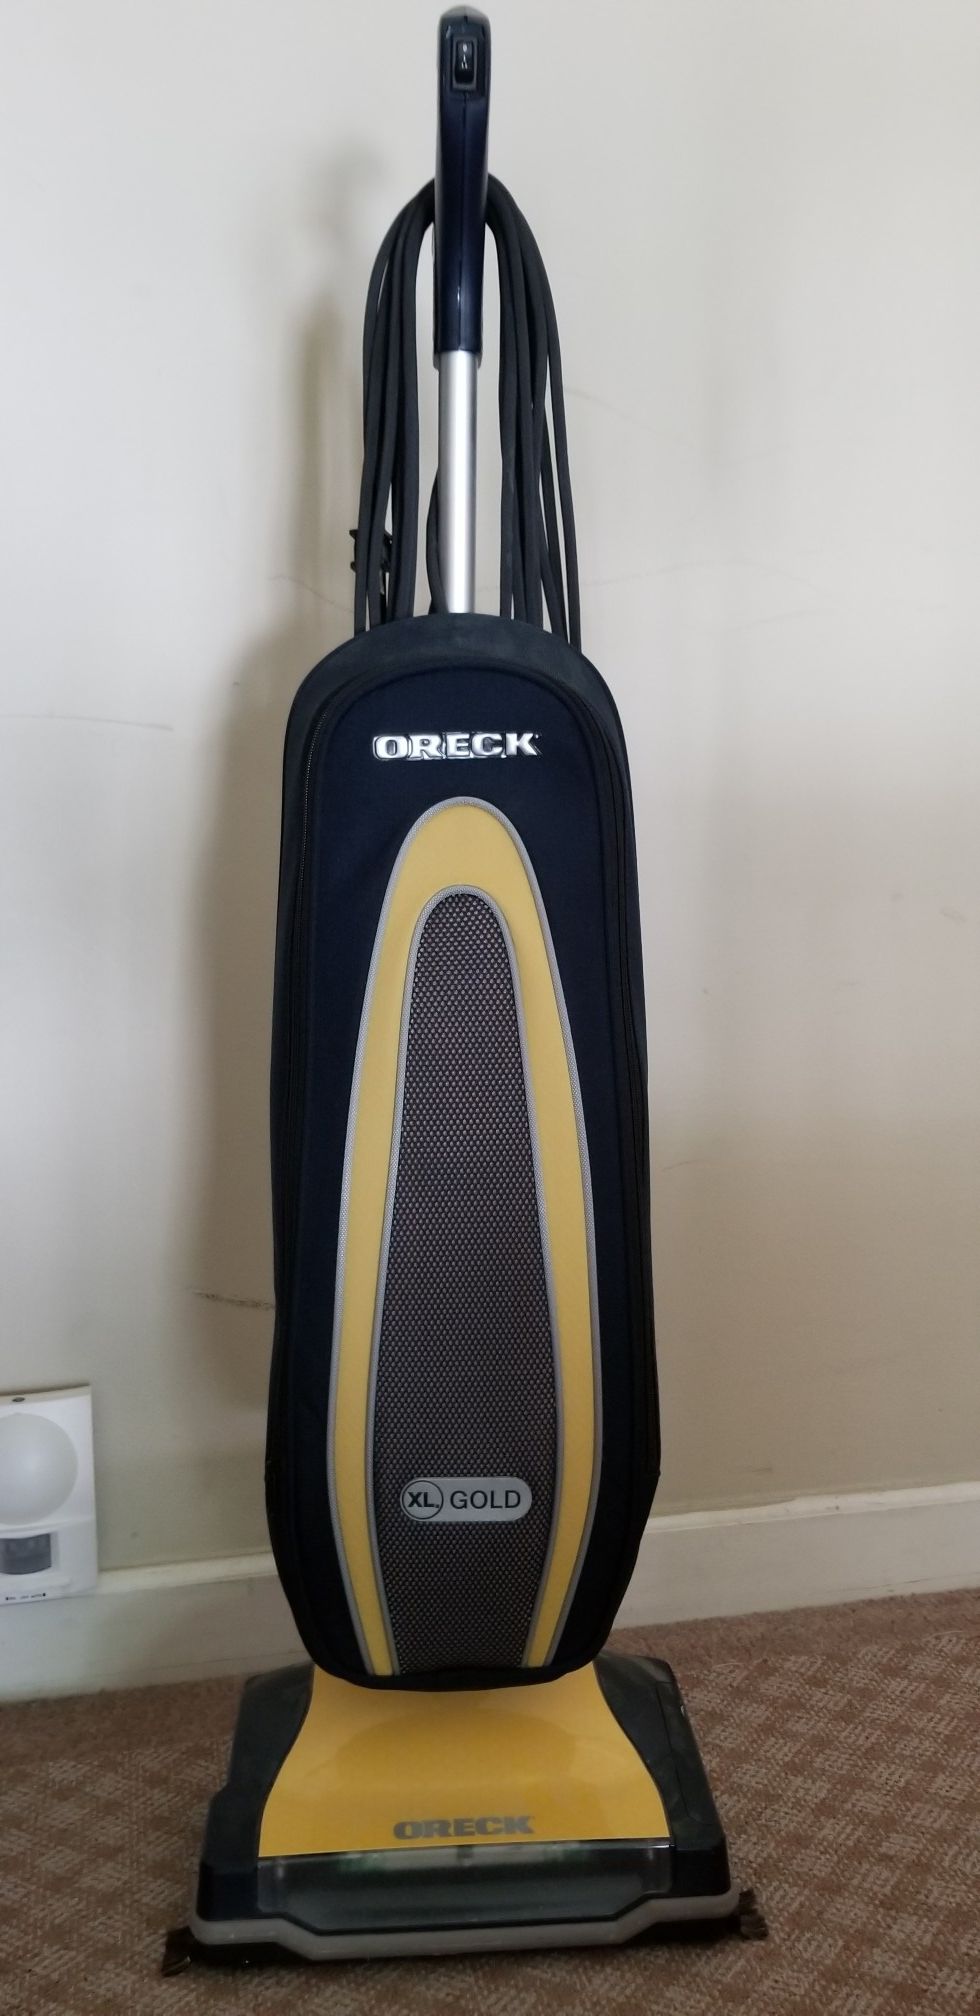 Oreck XL Gold upright vacuum